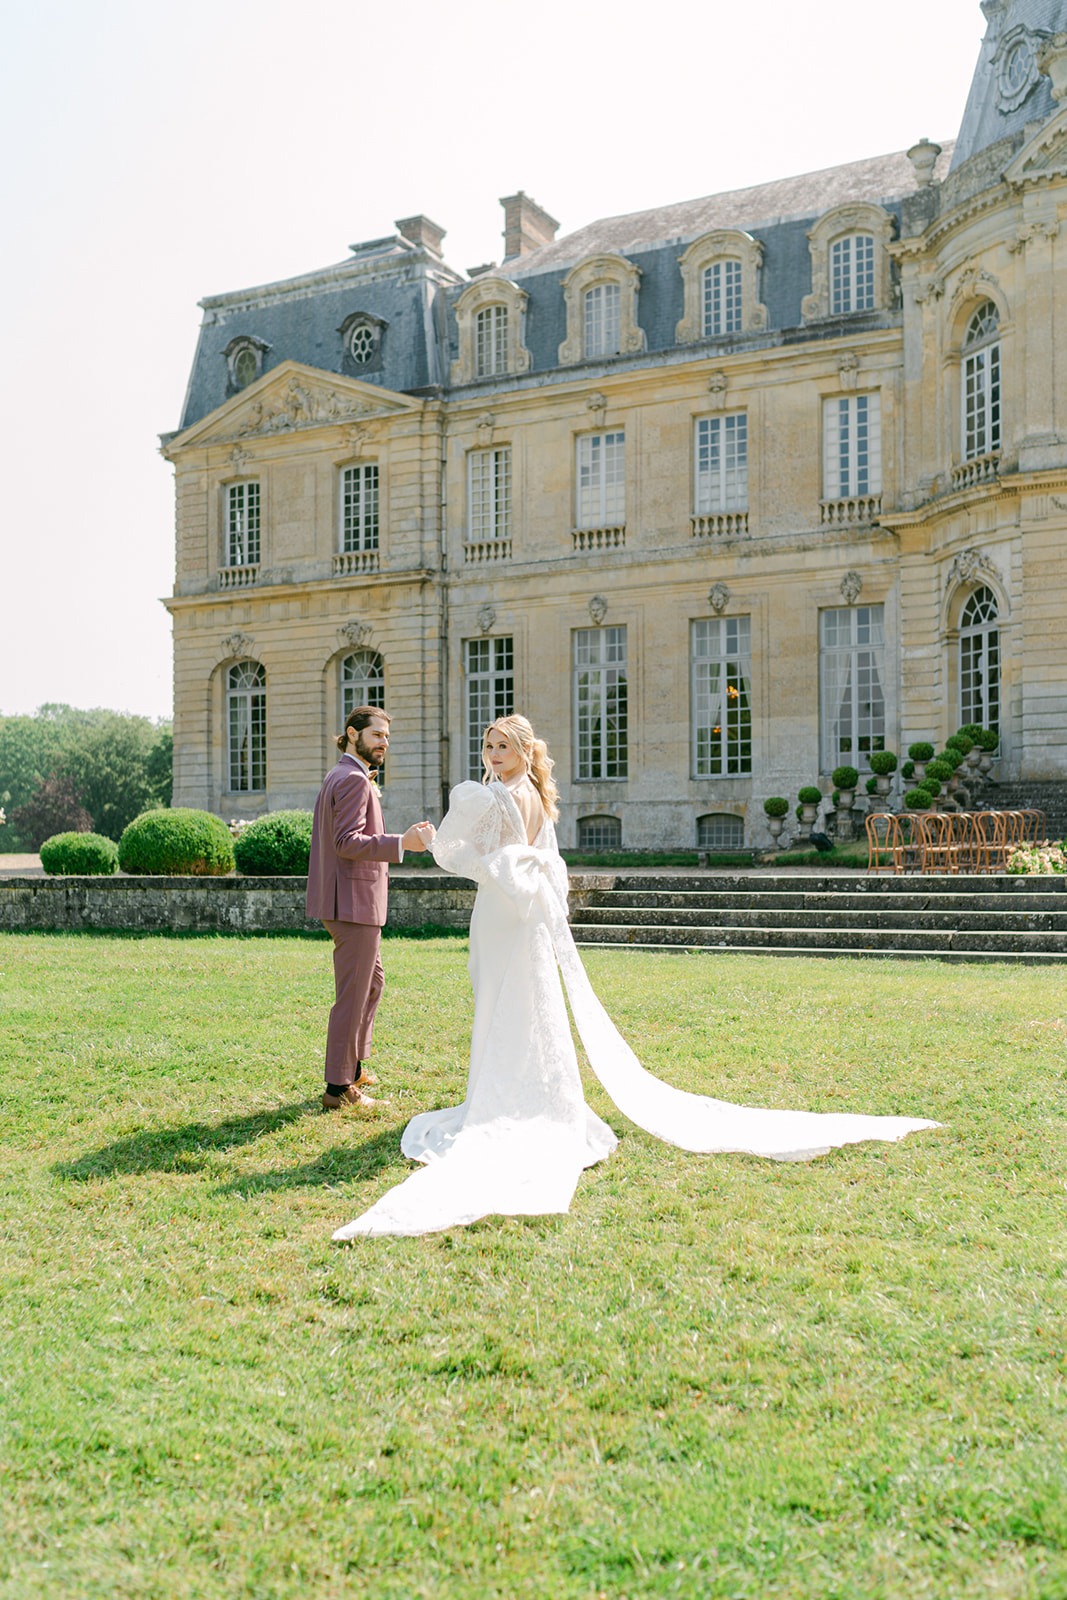 wedding dresses for a French chateau wedding